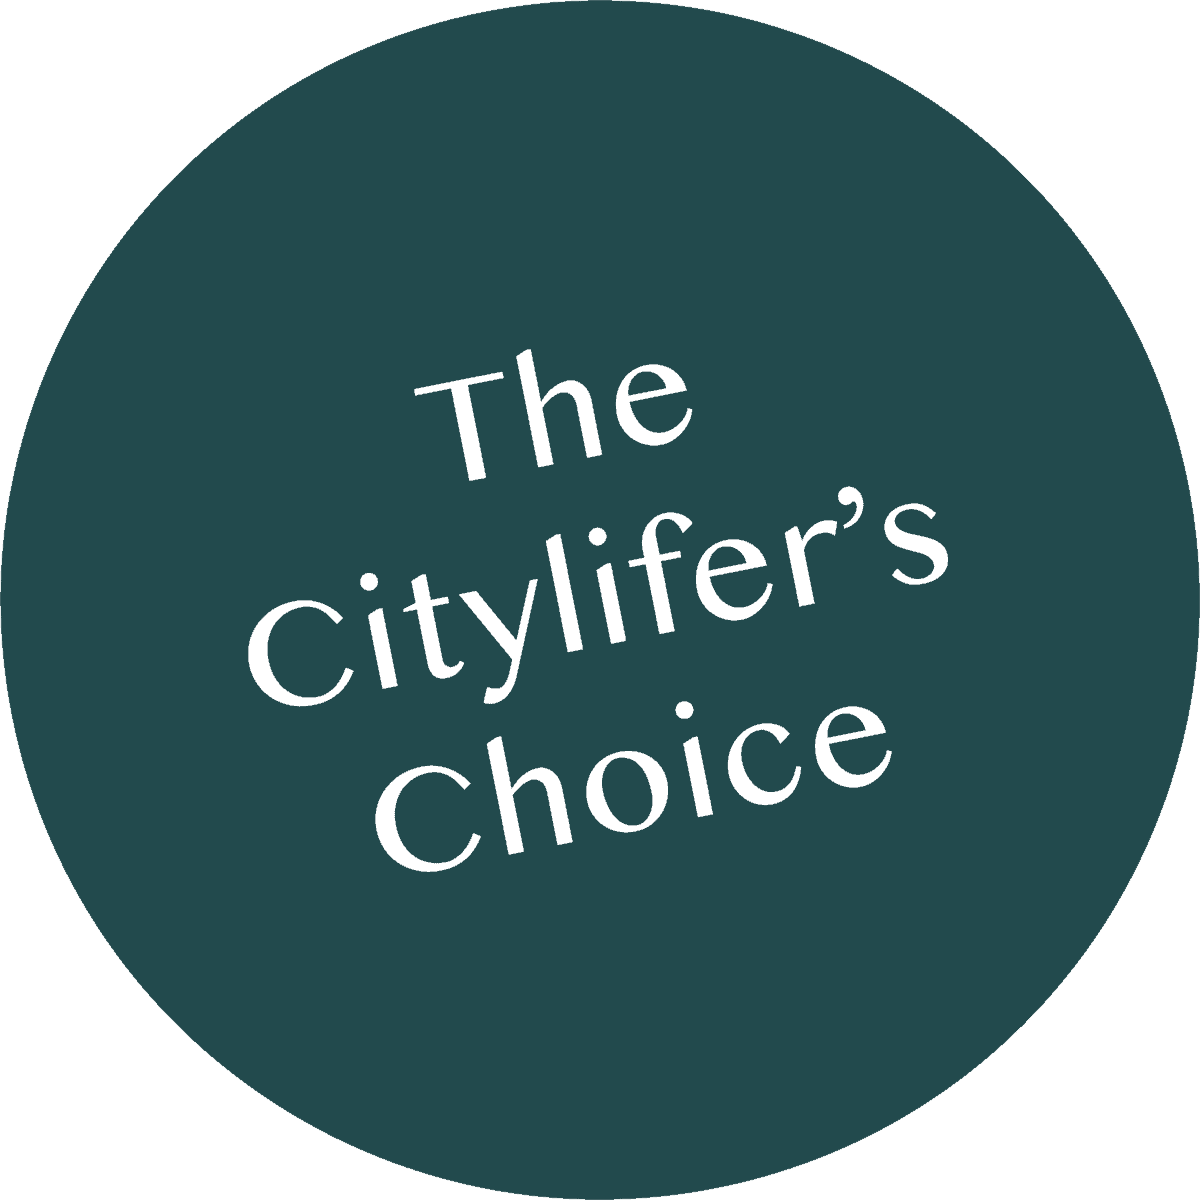 The Citylifers Choice 1 